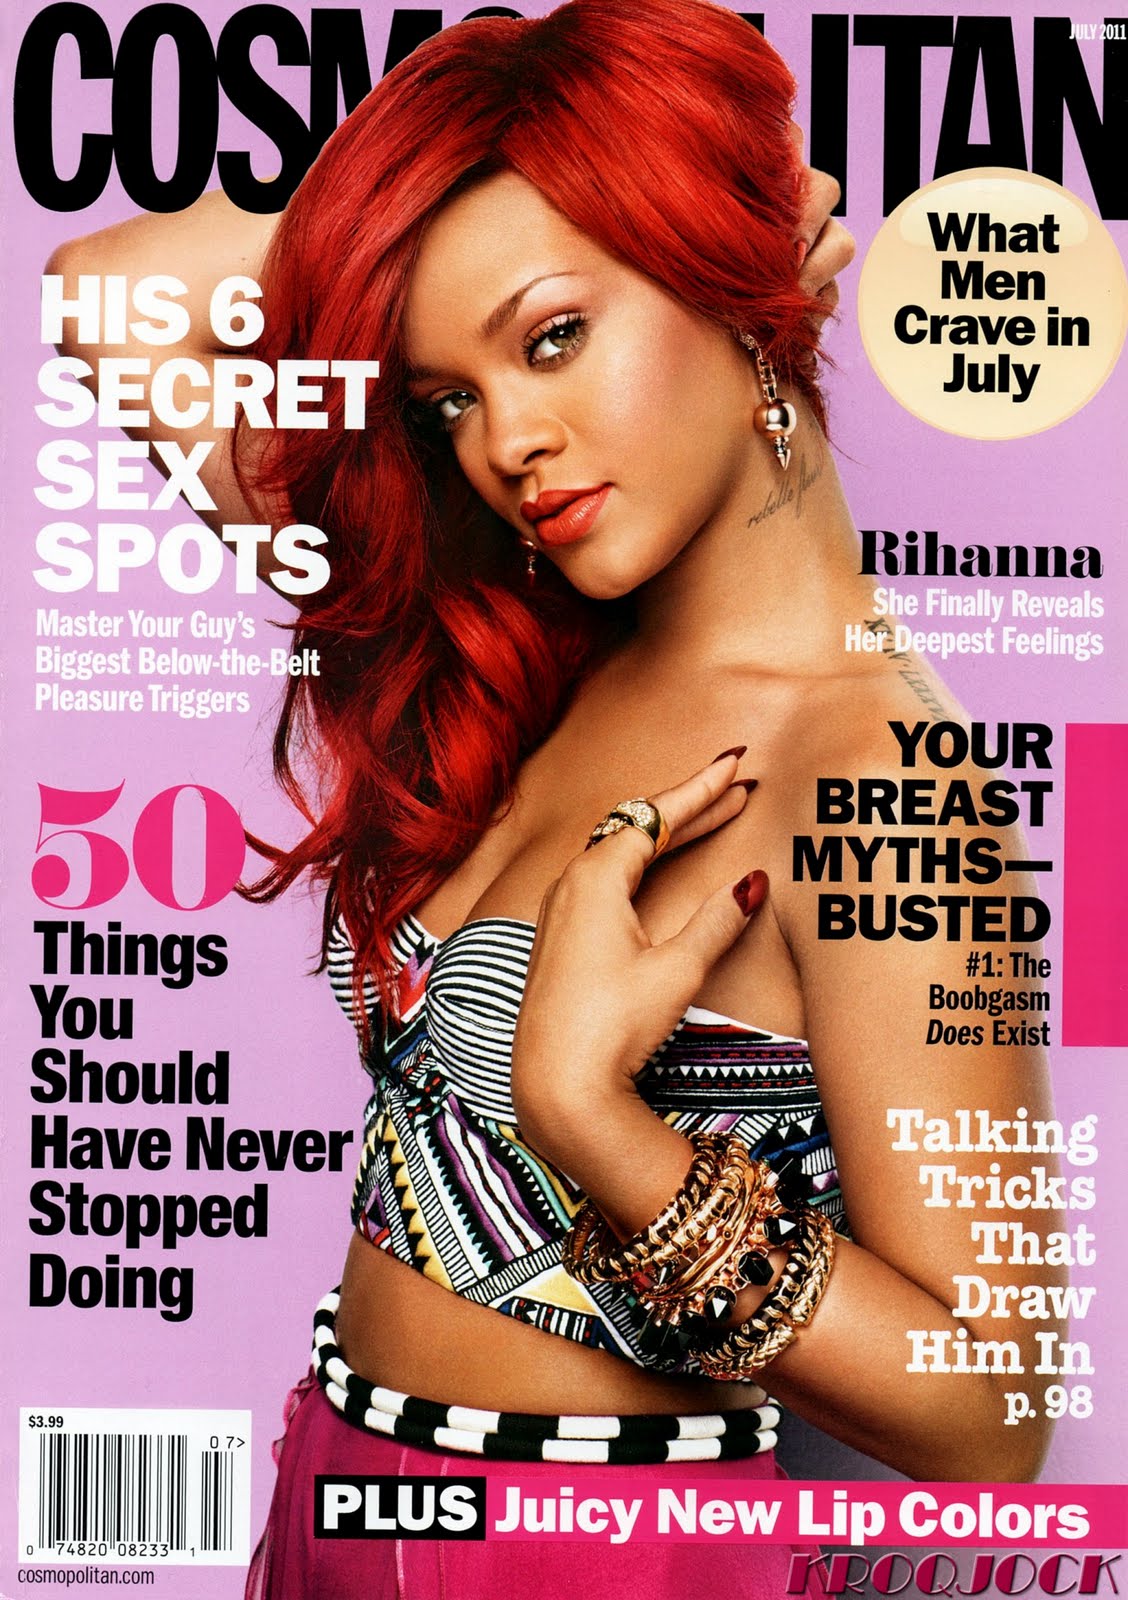 http://1.bp.blogspot.com/-mxpXTiq7aXg/TeUQRh064VI/AAAAAAAAAkA/-7fRTcTFFnM/s1600/Rihanna-138.jpg